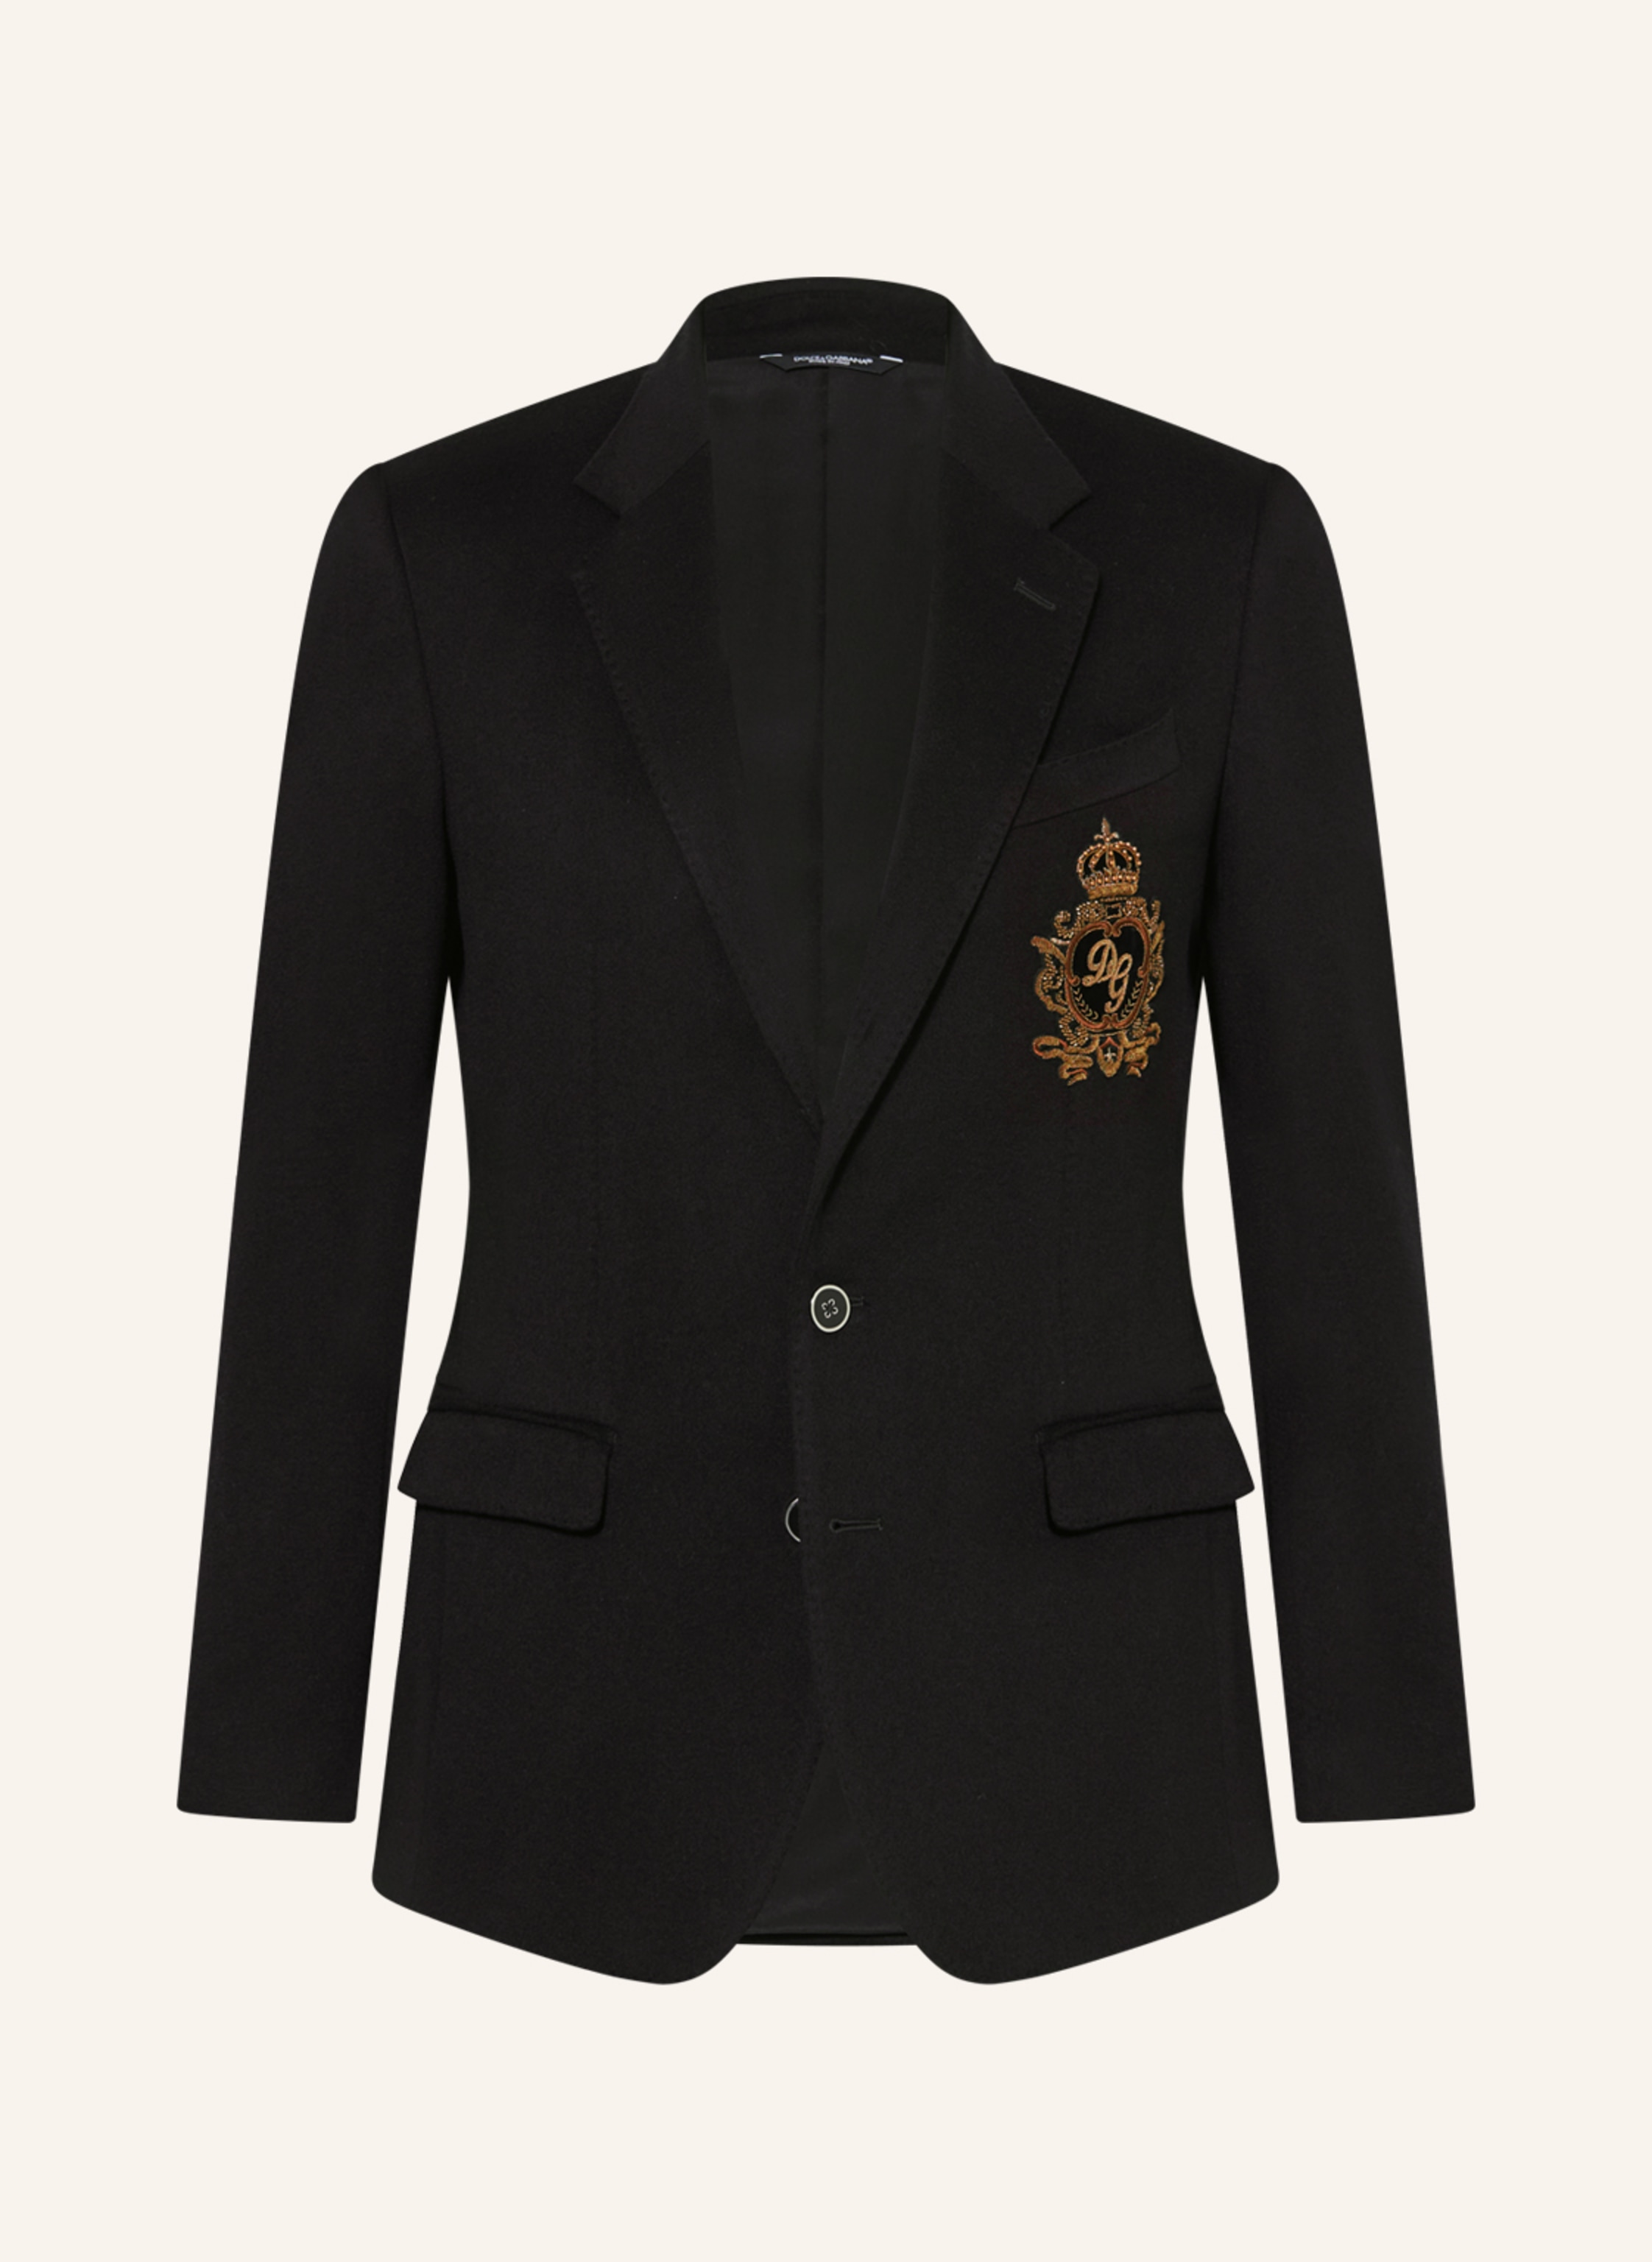 DOLCE & GABBANA Tailored jacket regular fit in black